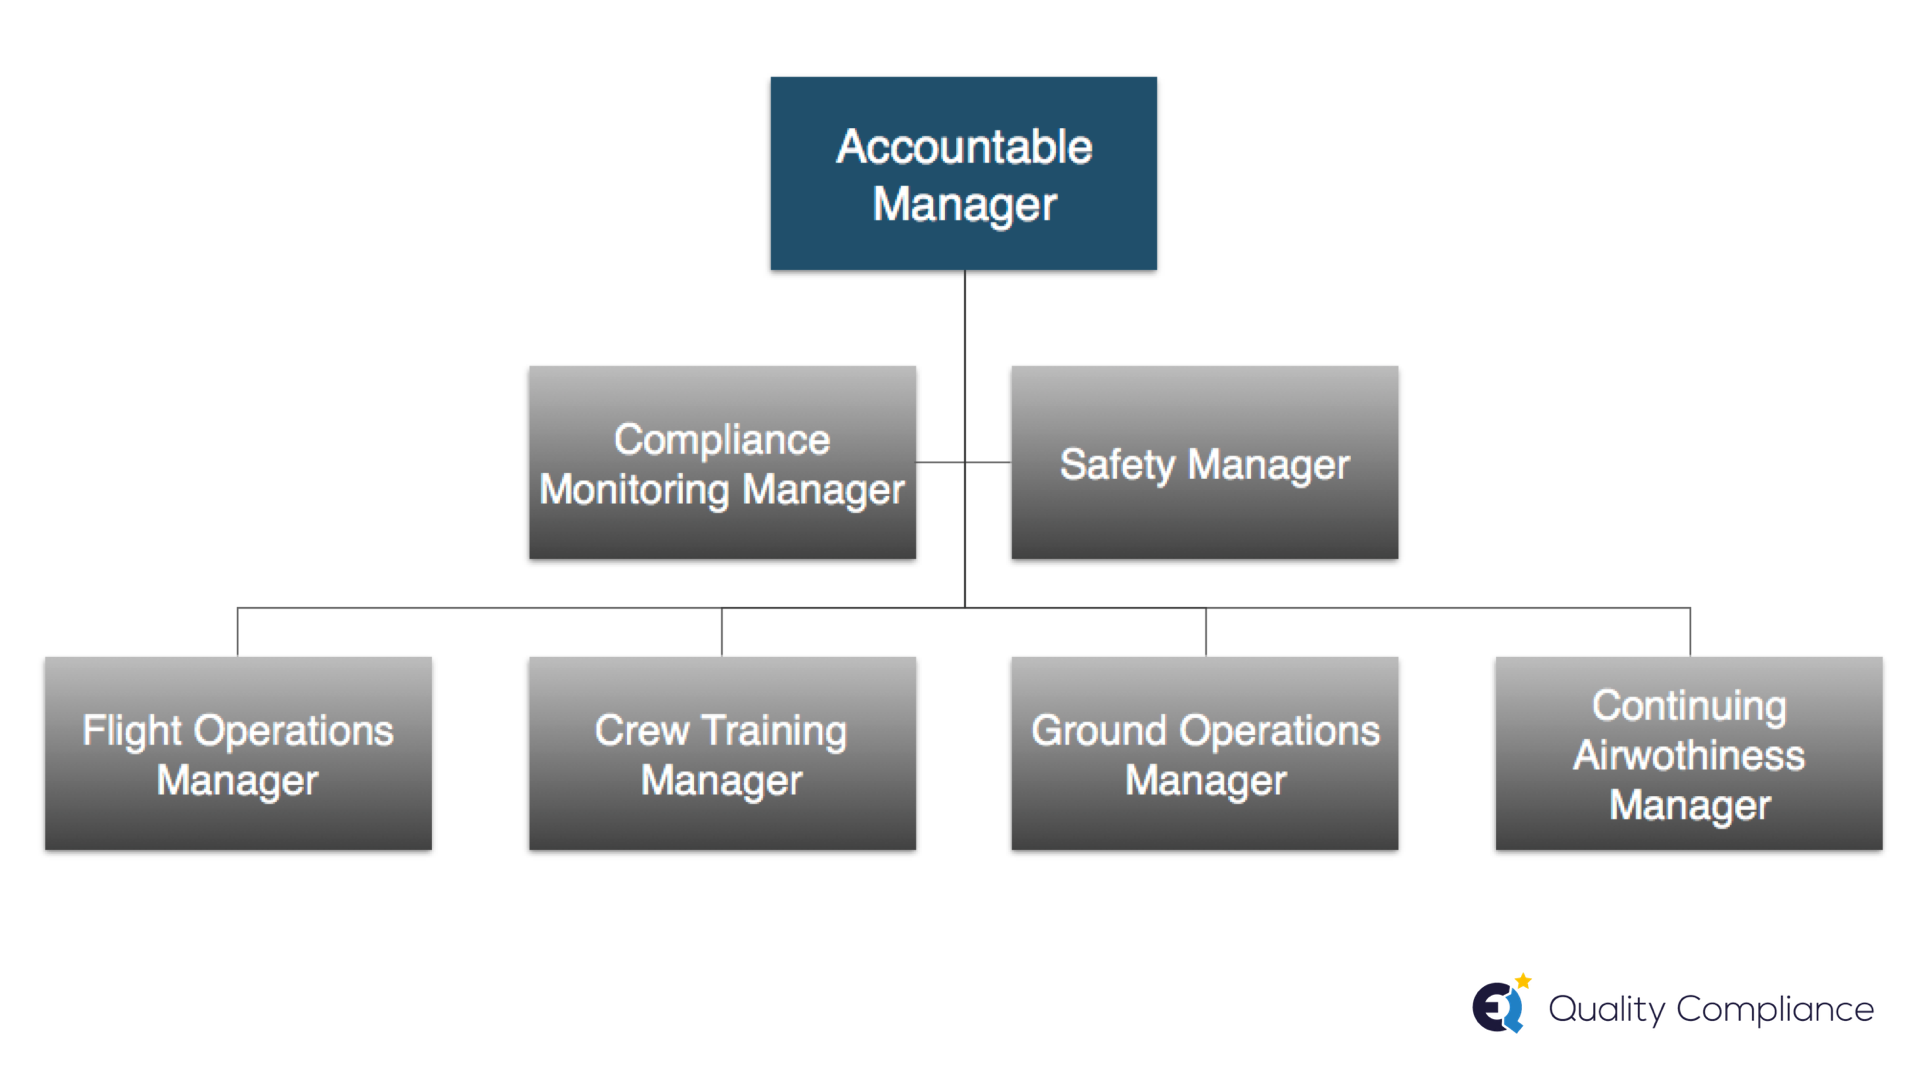 certify an Air Operator Certificate in EASA 2